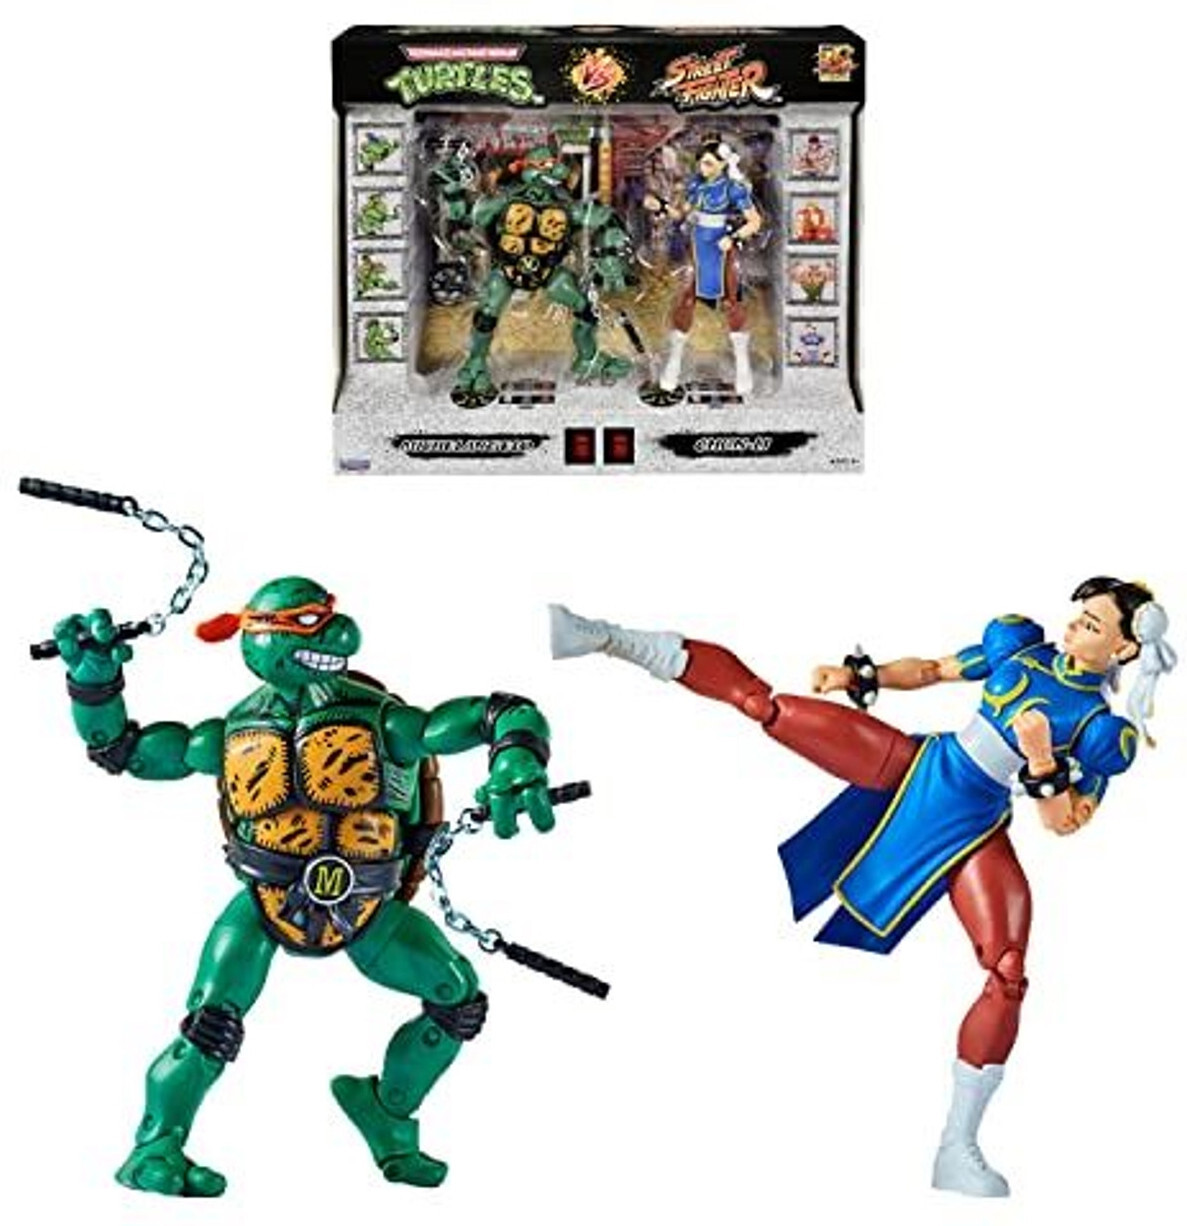 Bandai teenage mutant ninja turtles & street fighter action figure double pack - michelangelo & chun-li